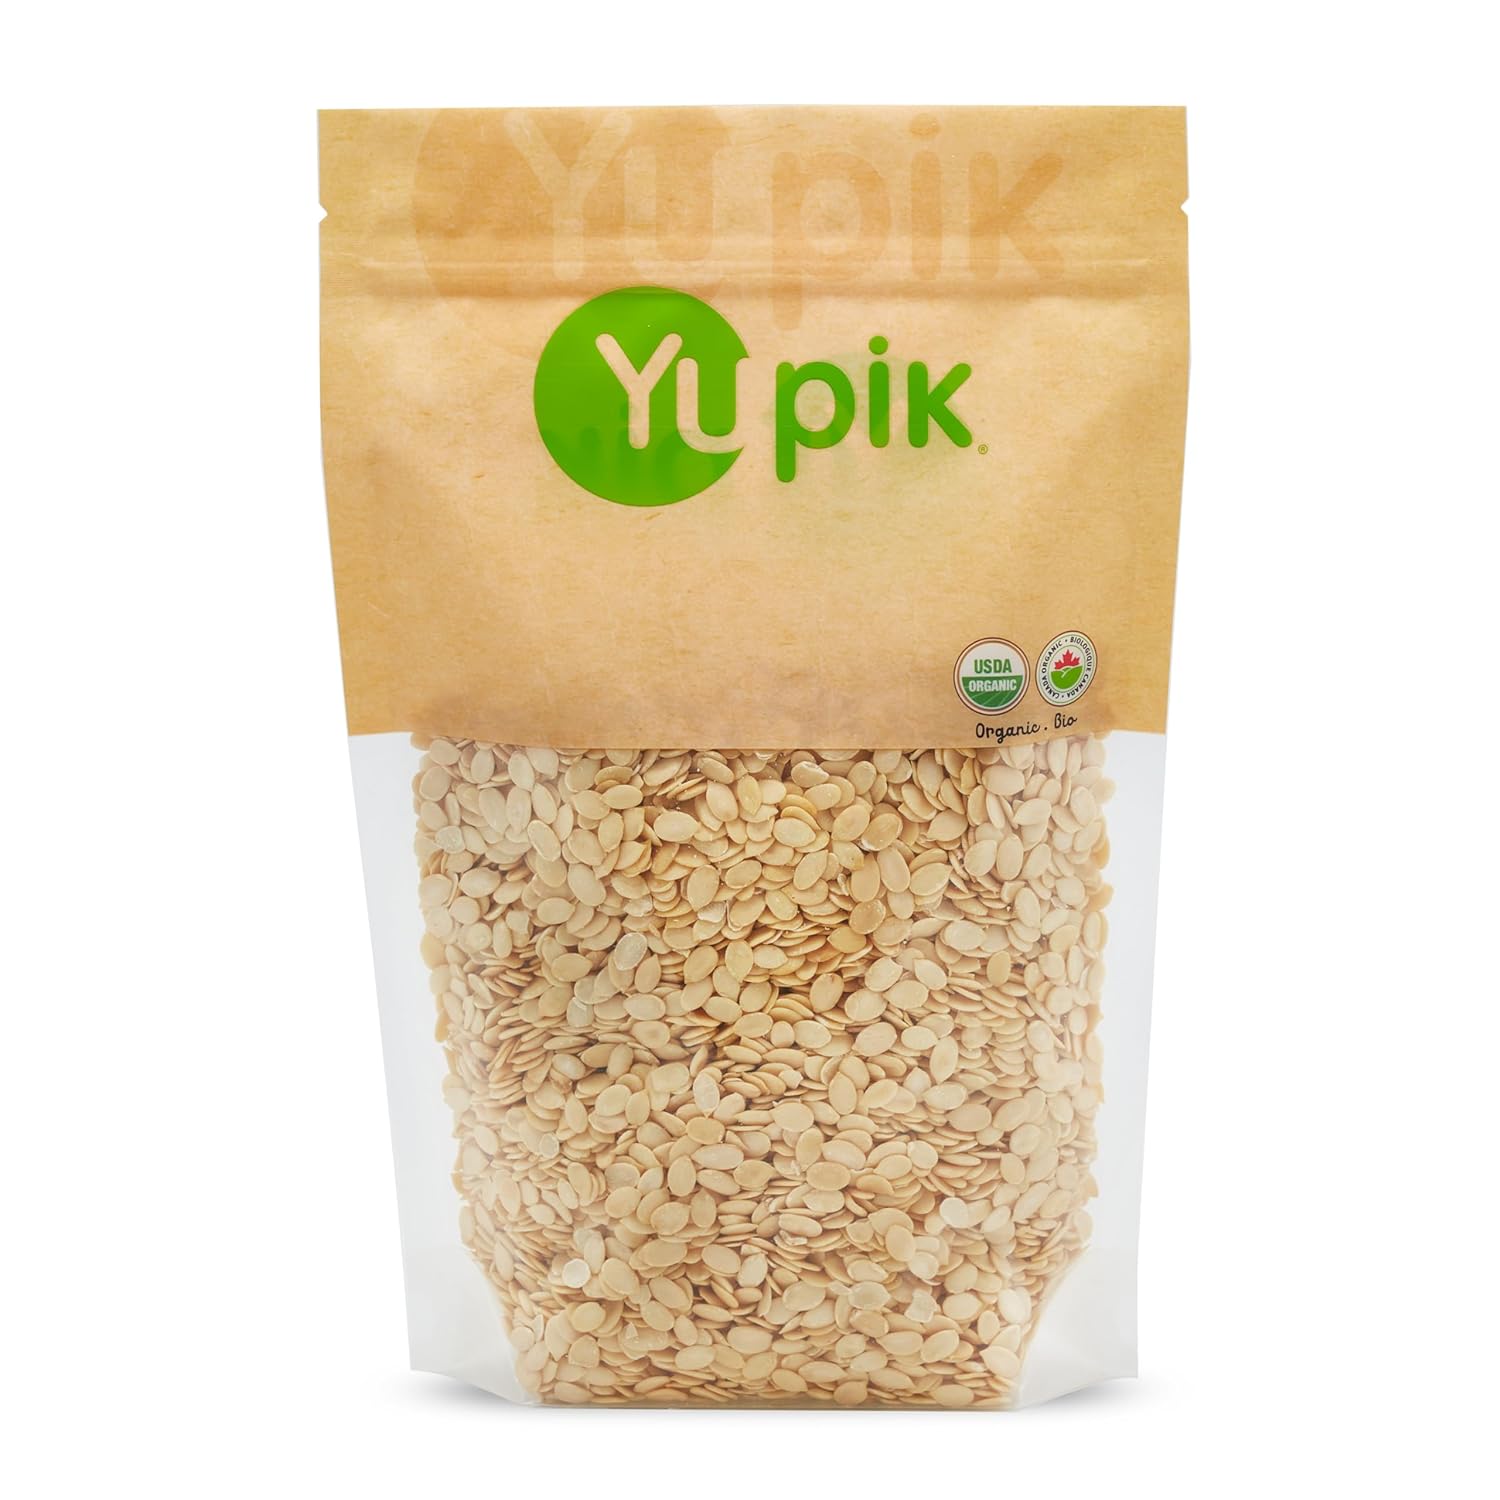 Yupik Organic Seeds/Kernels, Watermelon, 2.2 lb, Non-GMO, Vegan, Gluten-Free